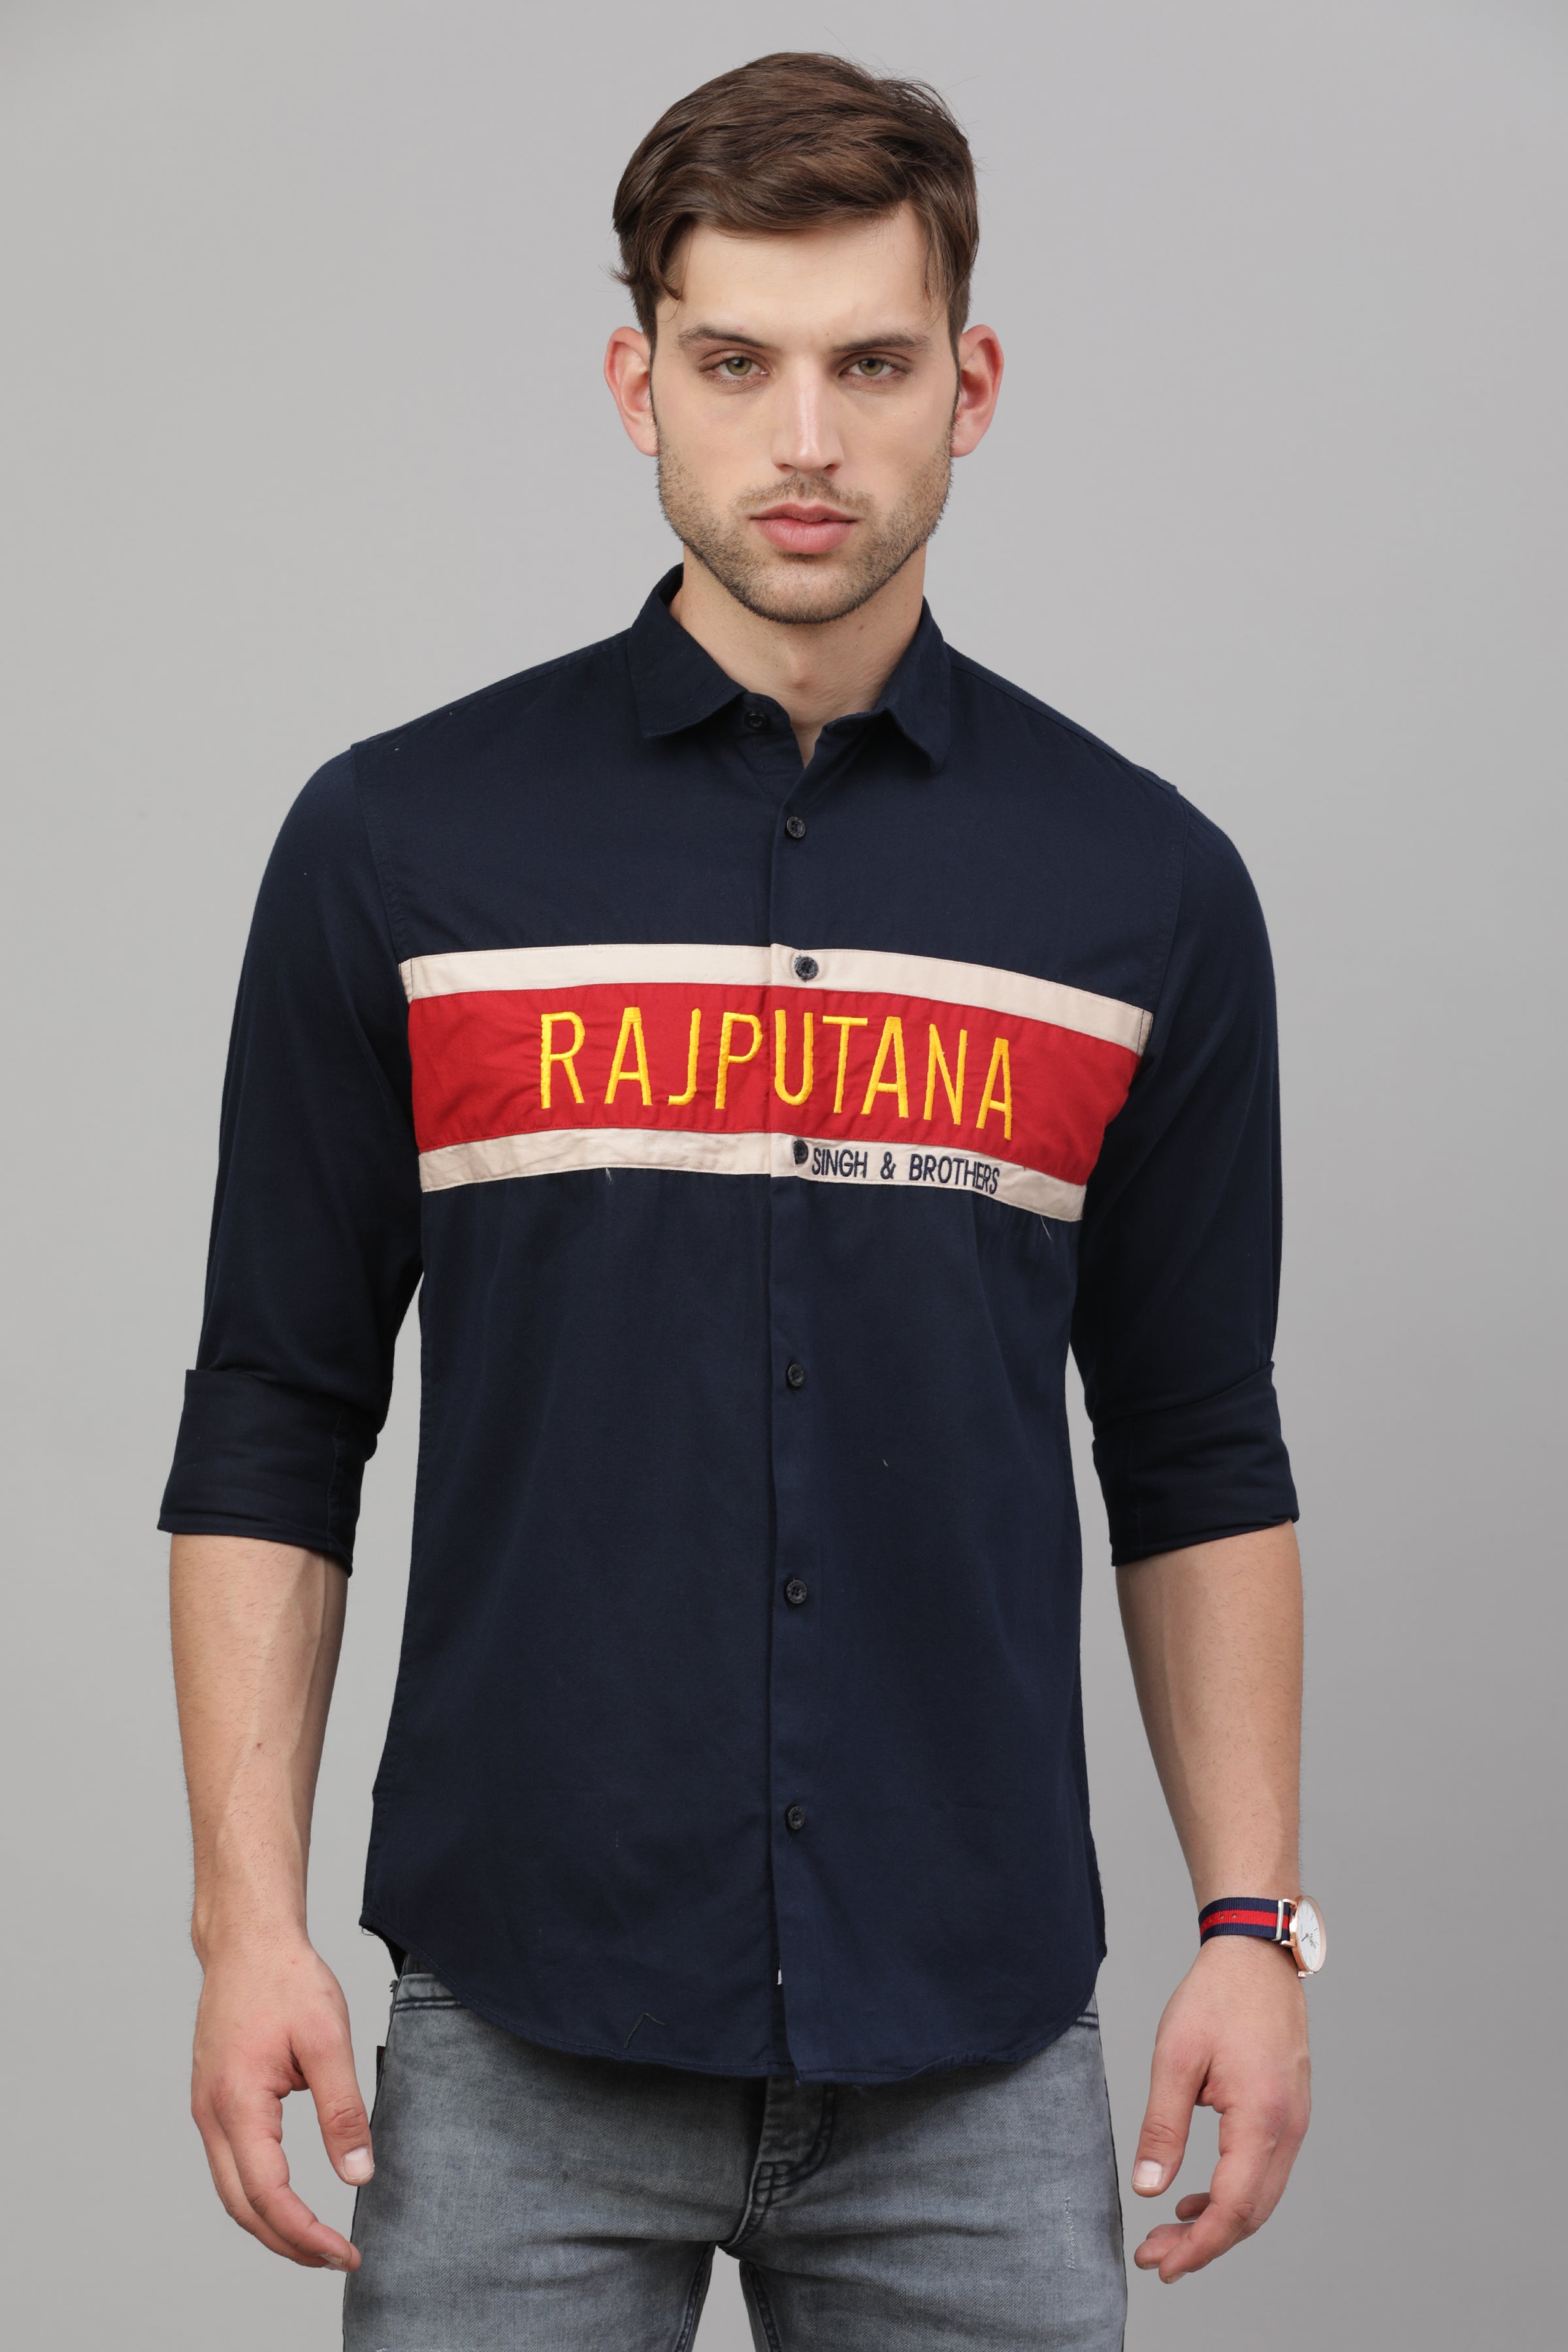 Rajputana Shirt – singh and brothers